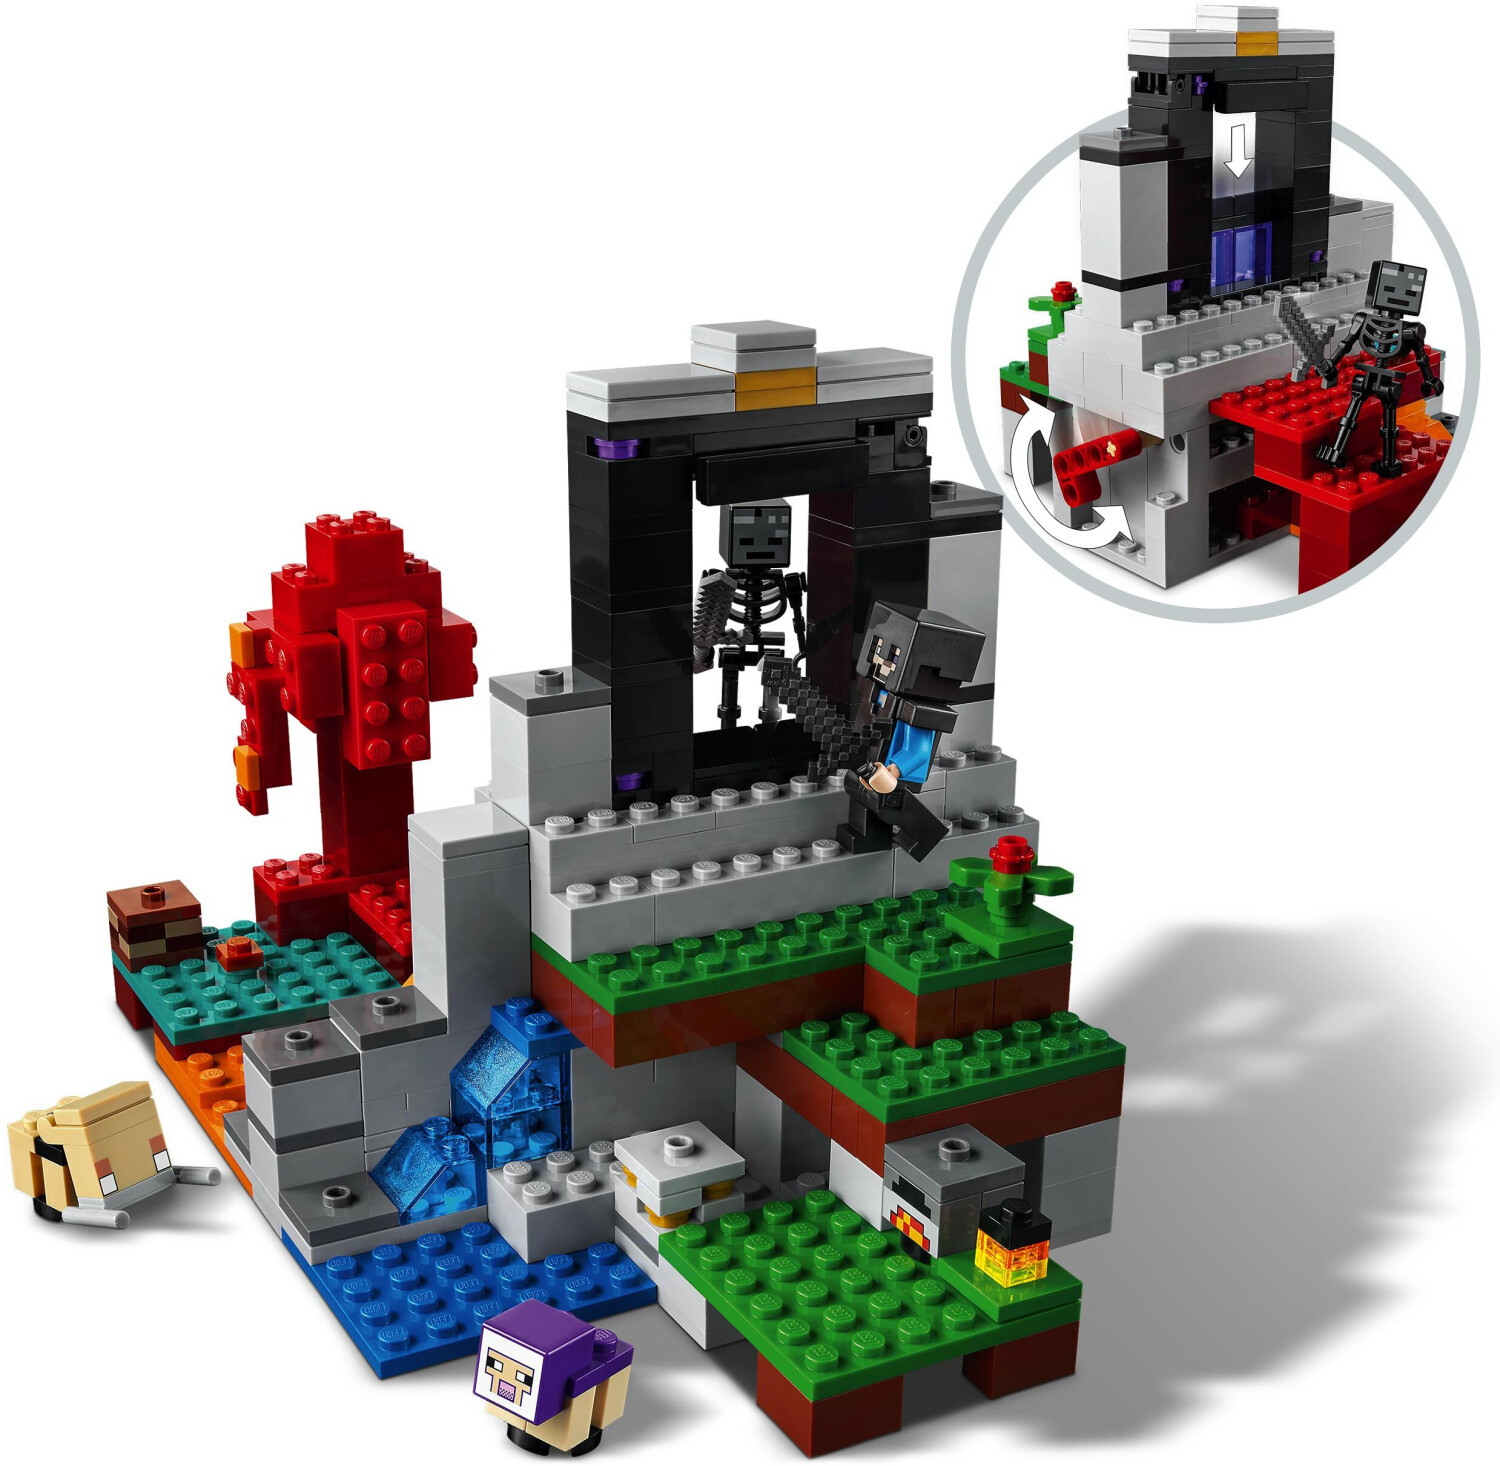 LEGO Minecraft Le portail en ruine - 316 pièces